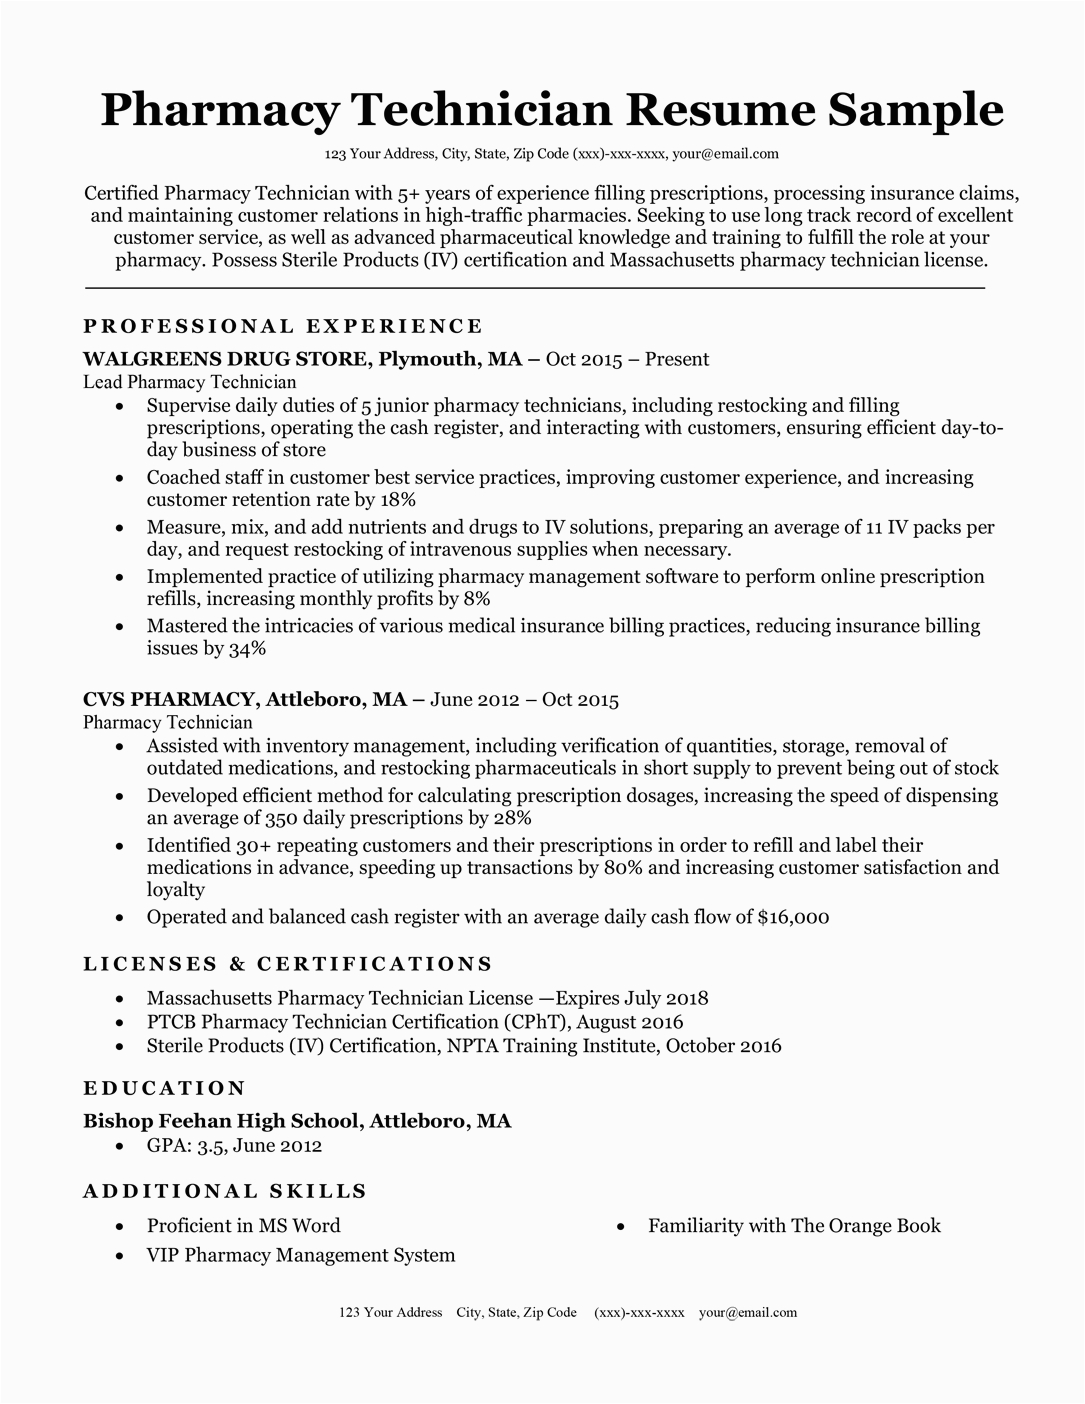 Sample Resume Objective for Colloge Of Pharmacy Application Pharmacy Technician Resume Sample No Experience Resume for Job Seeker